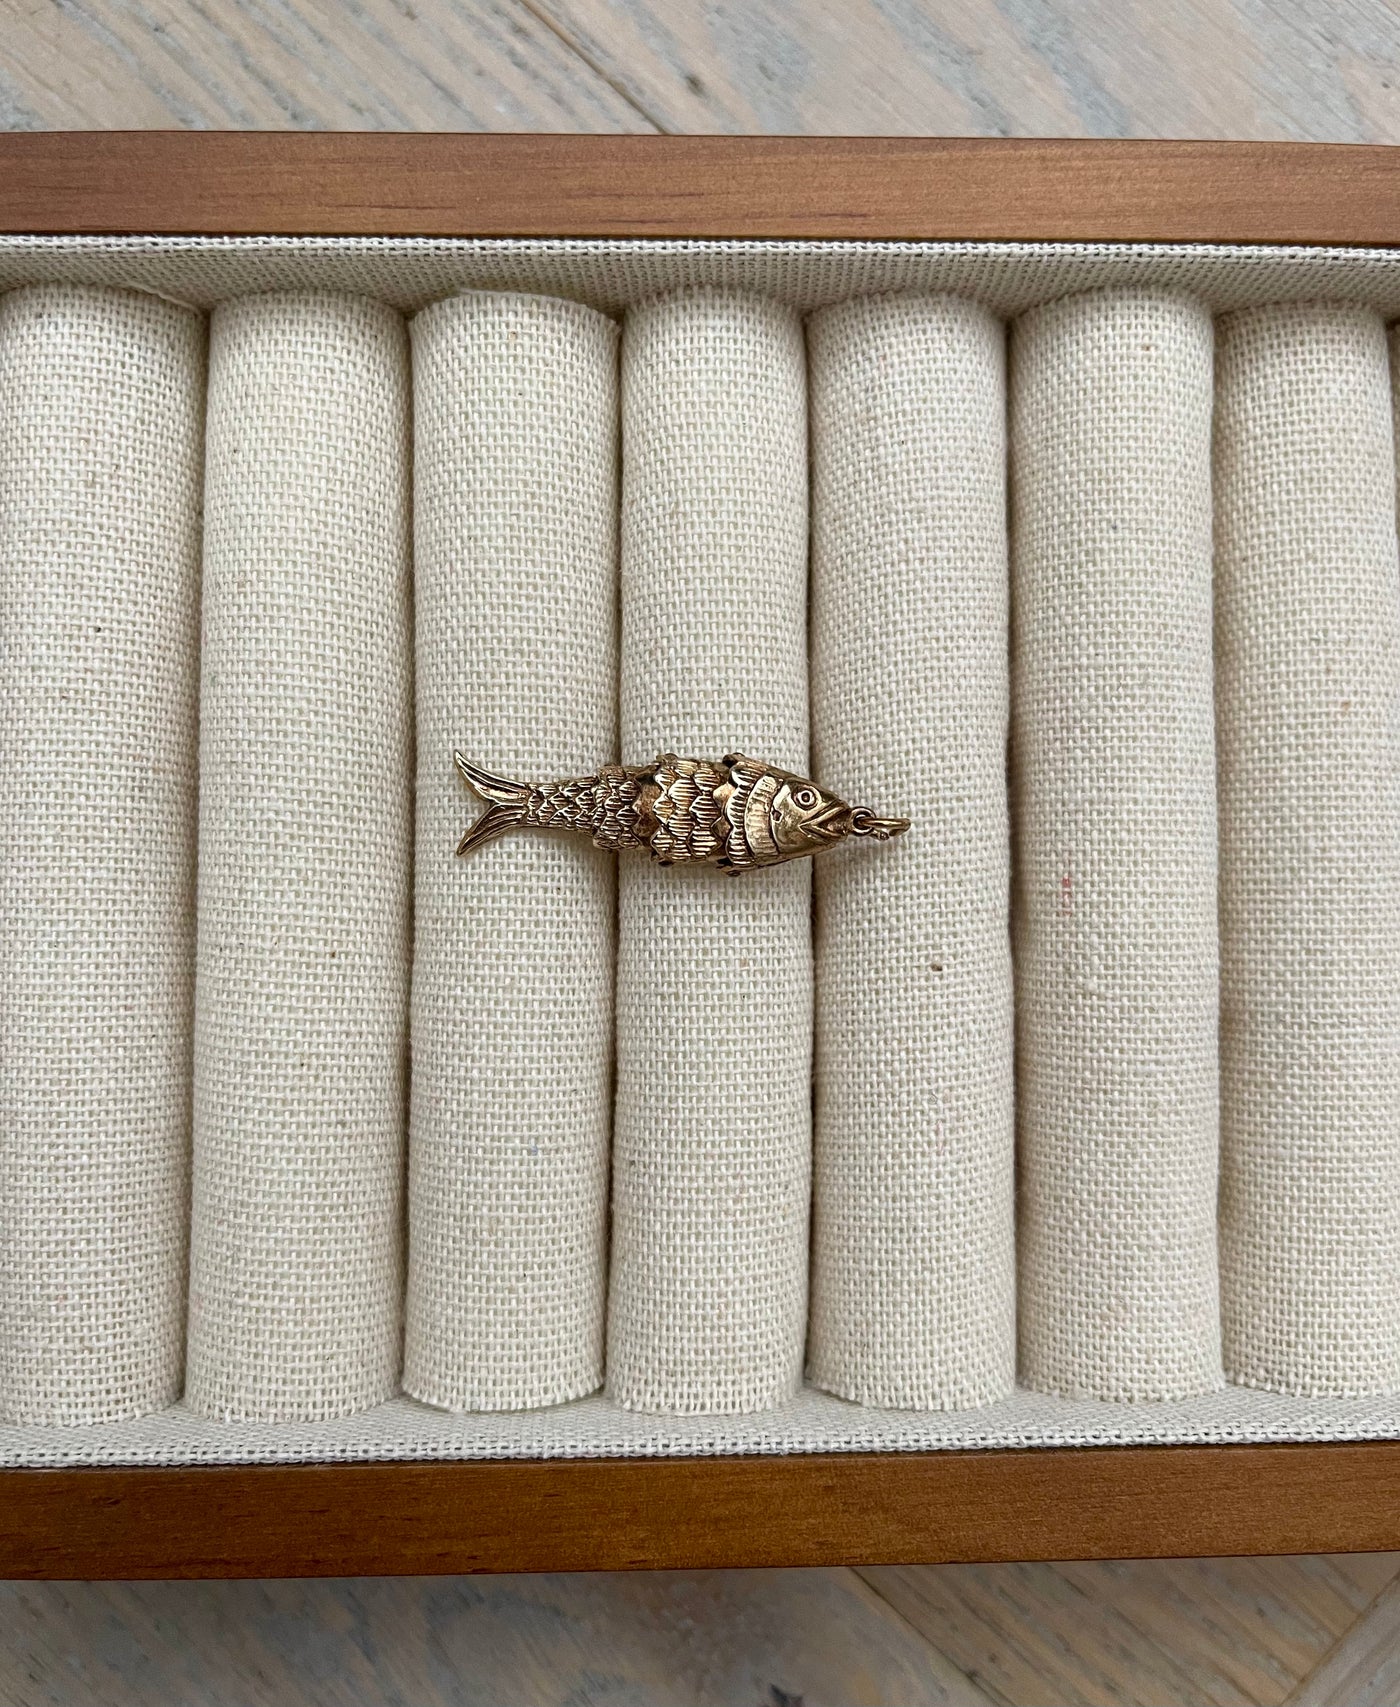 'Francesca' 9ct Gold Vintage Fish Charm